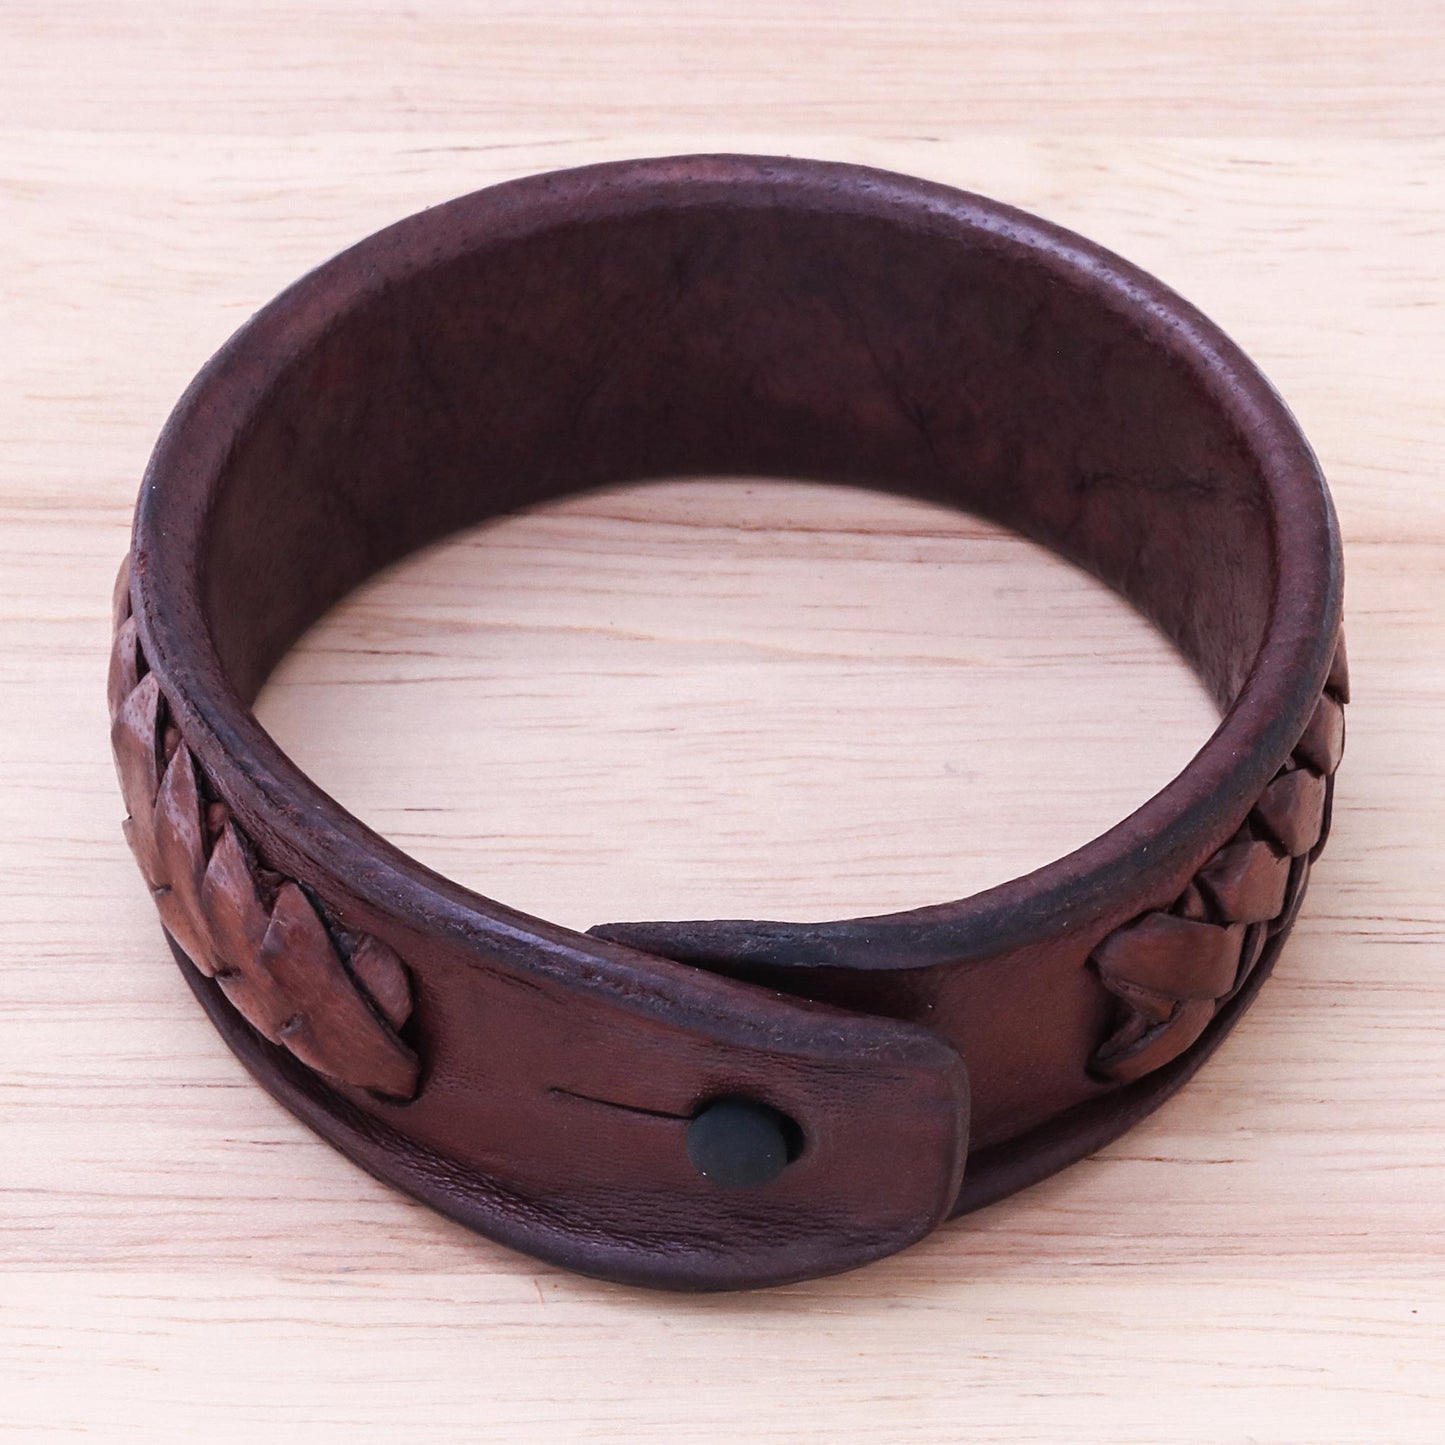 Weaver's Life Brass & Leather Wristband Bracelet